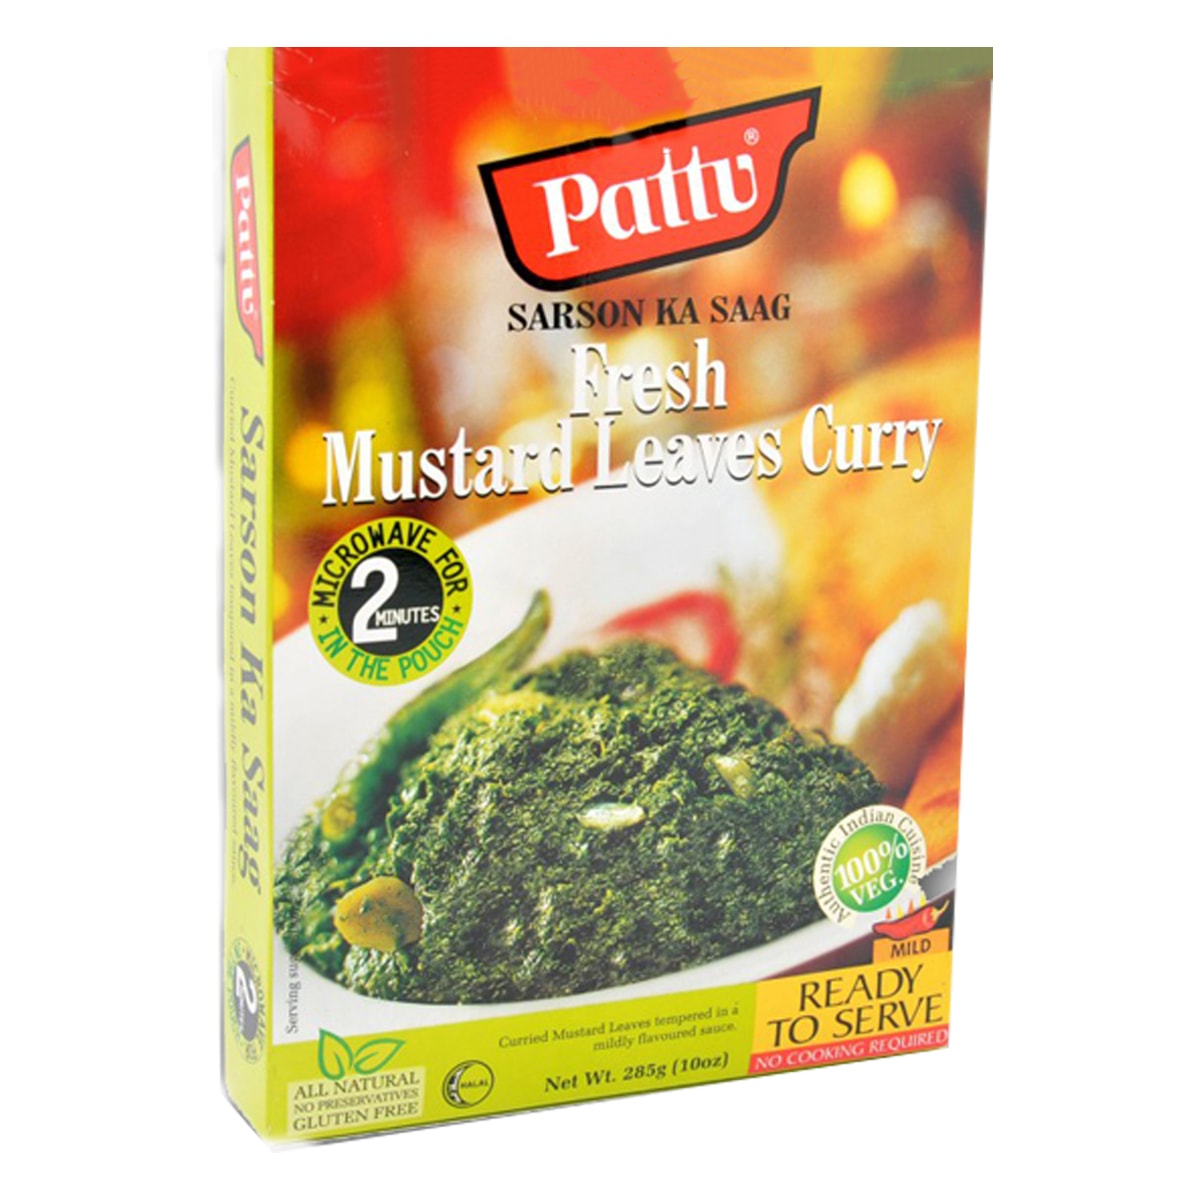 Buy Pattu Sarson Ka Saag (Fresh Mustard Leaves Curry) Ready to Serve - 285 gm